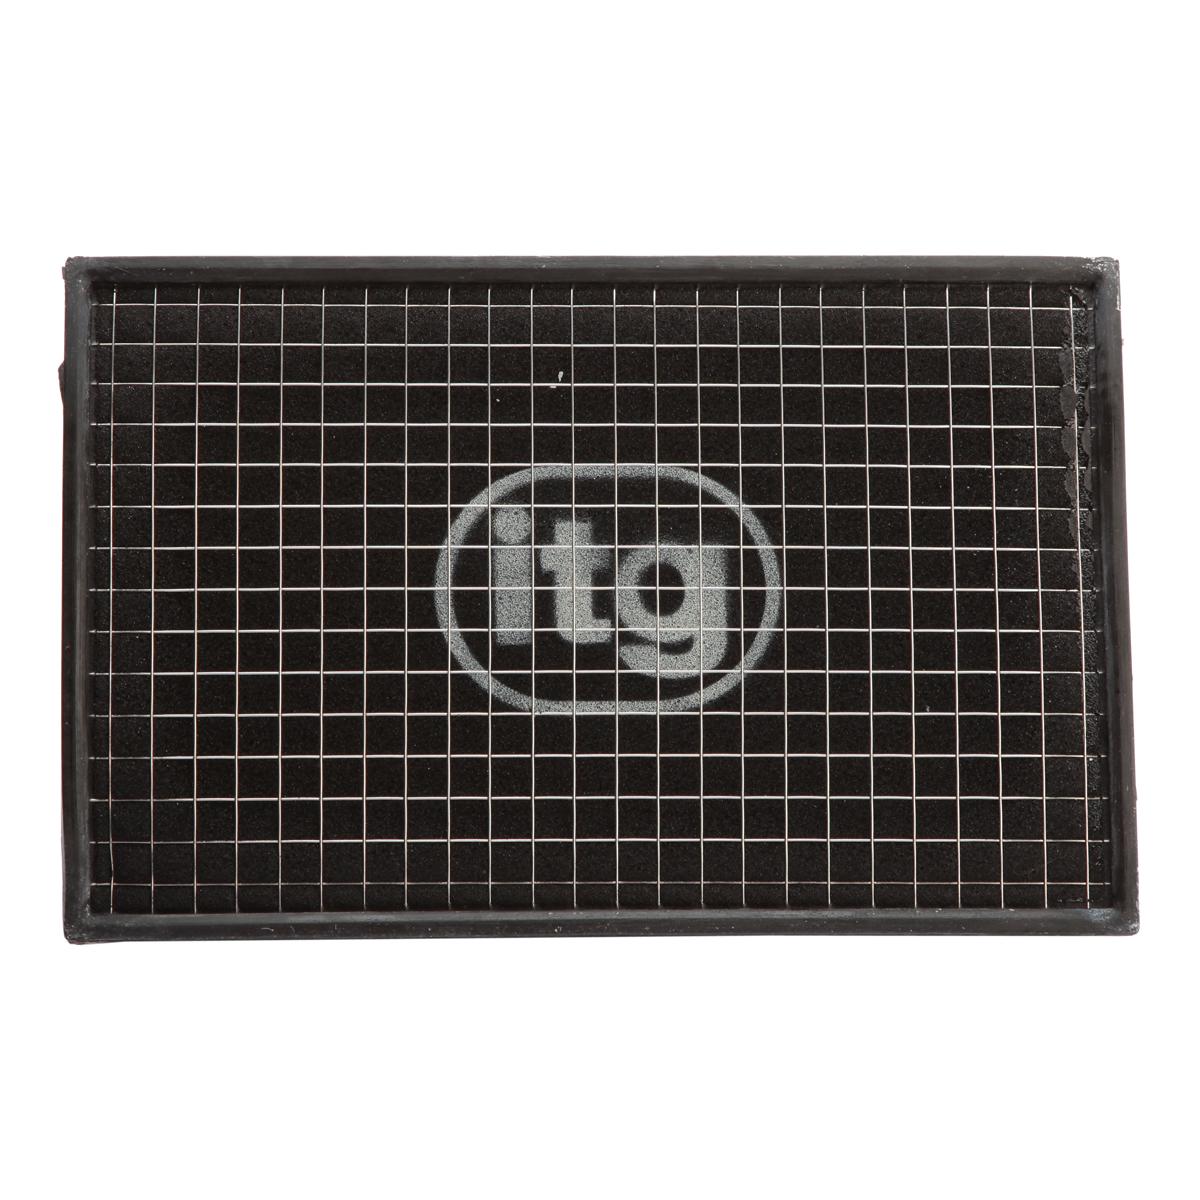 ITG Air Filter For Audi TT/TTS 3.2 V6 (09/06>), 2.0 TFSi (05/08>)